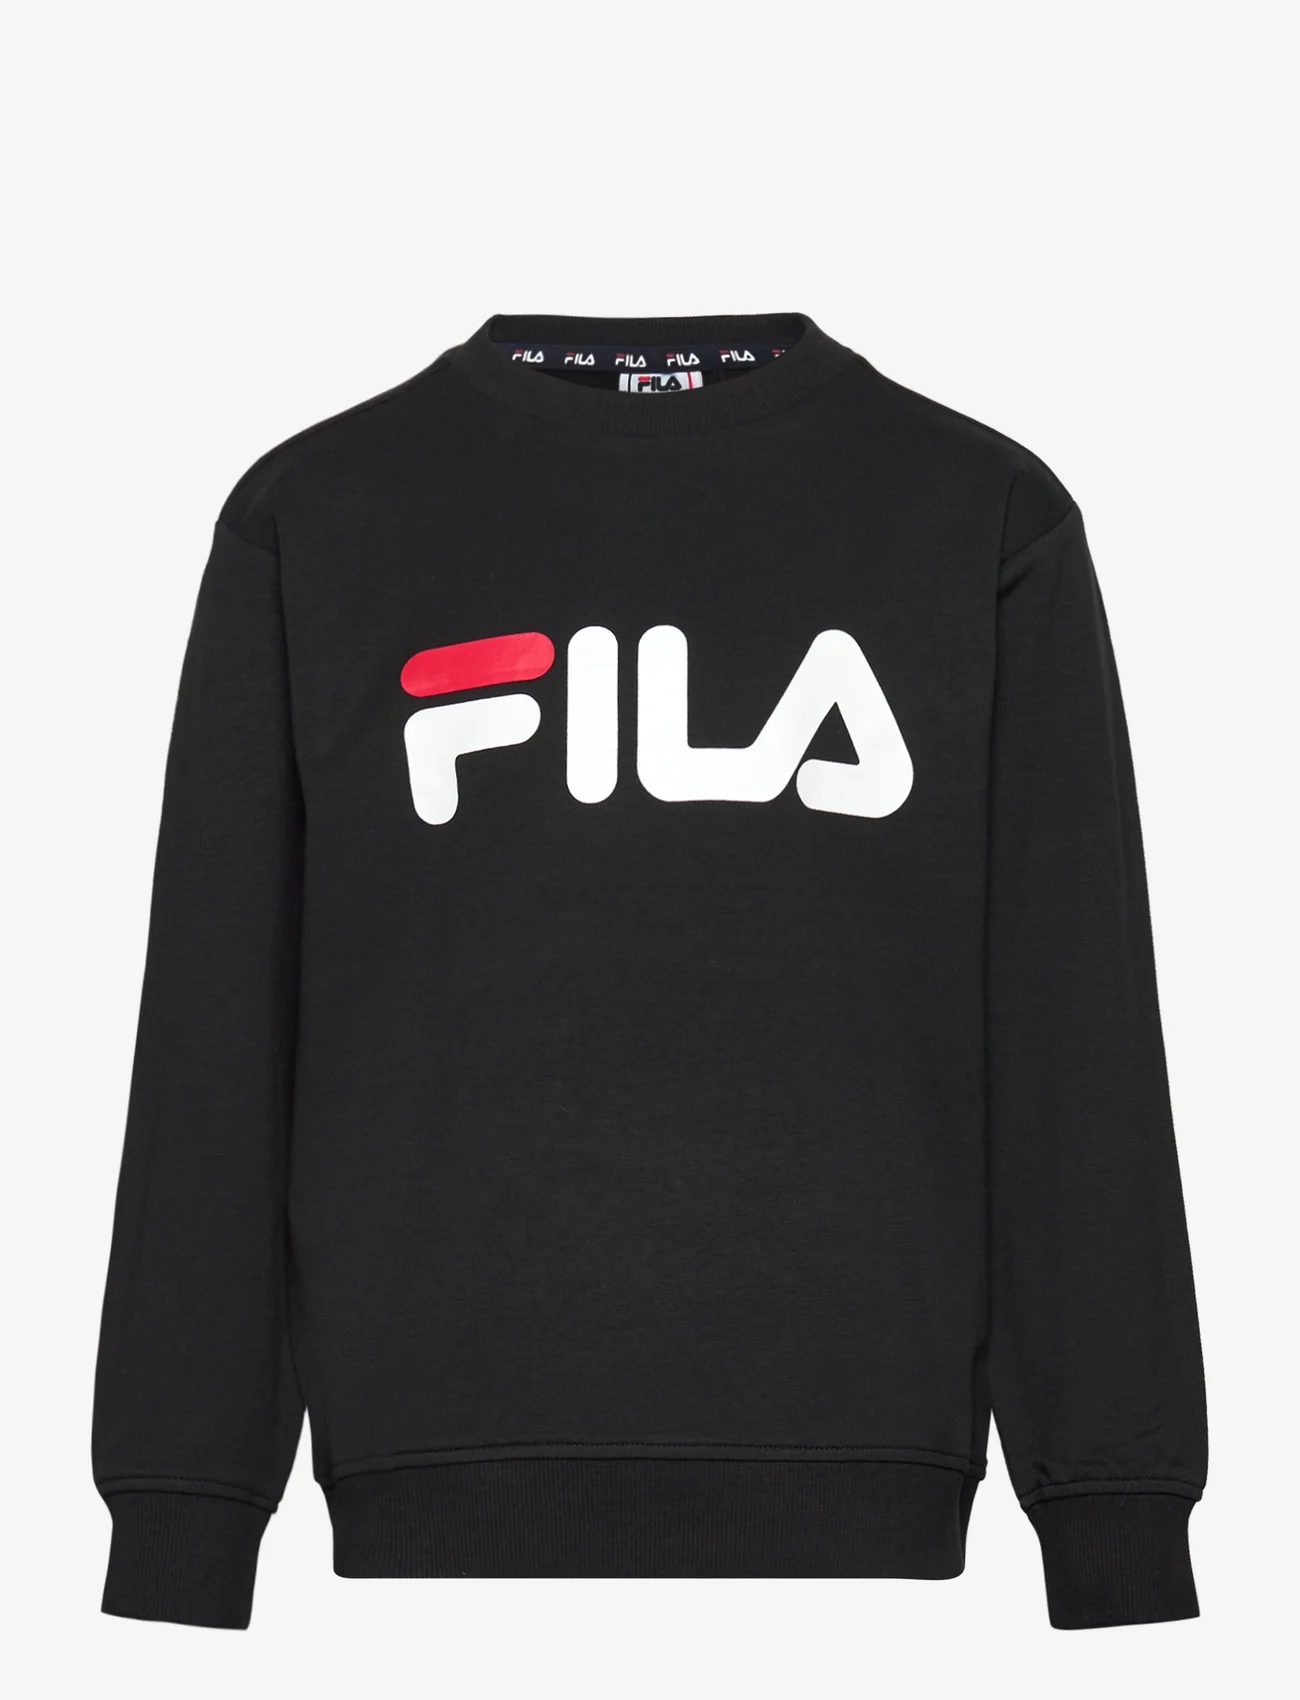 FILA - BABINA GREDA classic logo crew sweat - sweatshirts - black - 0